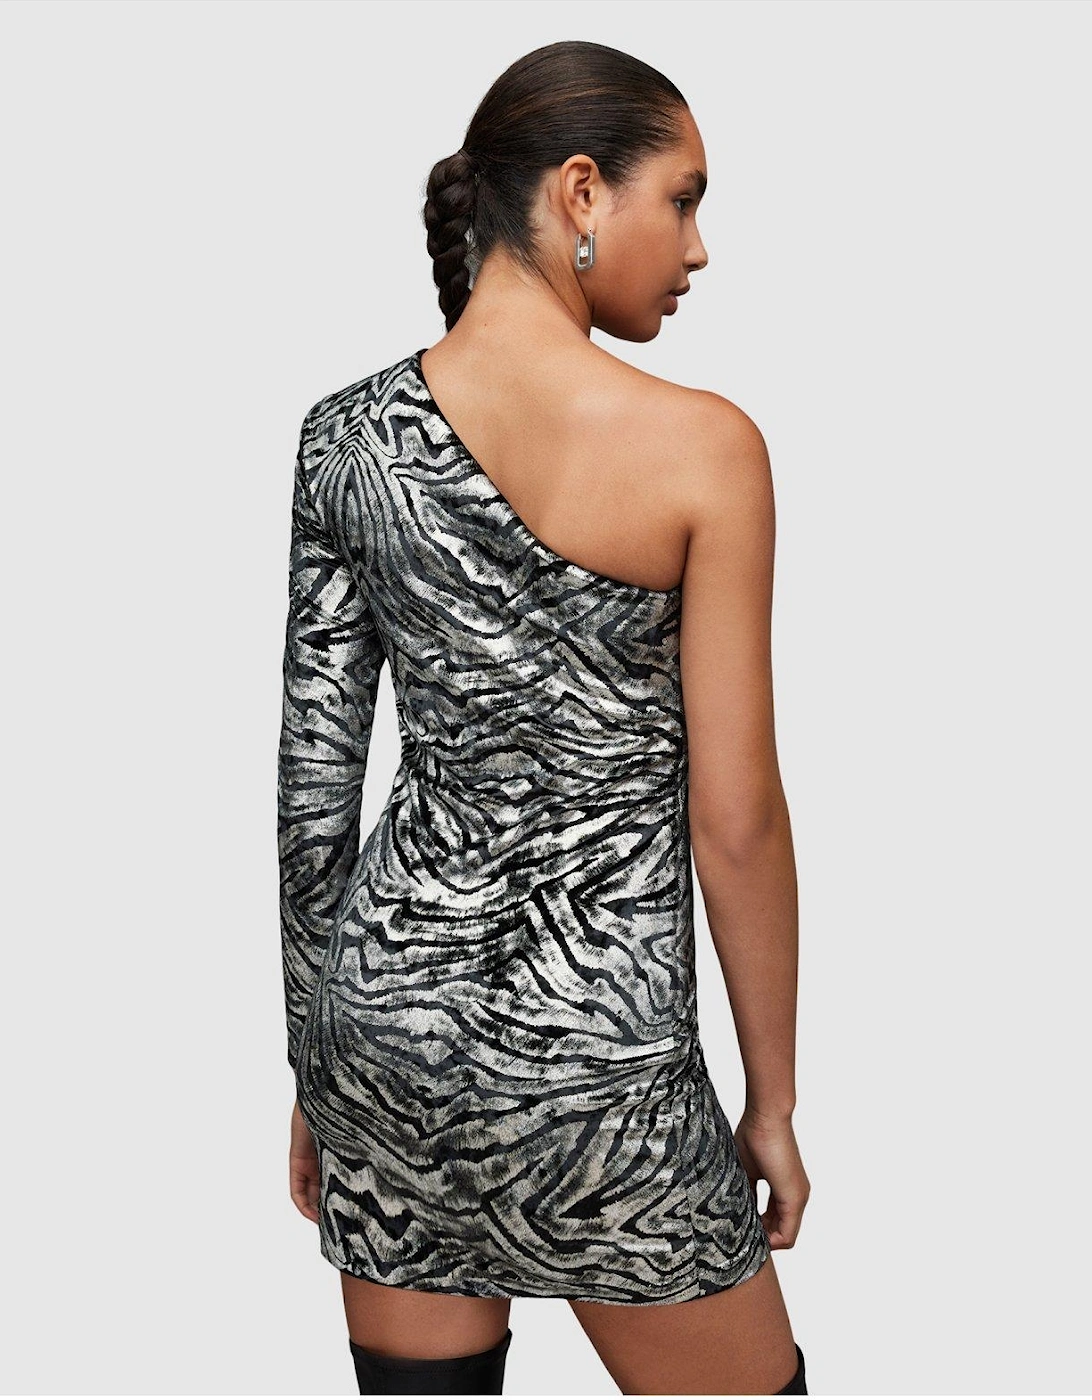 Deri Zebra Dress - Black/Silver